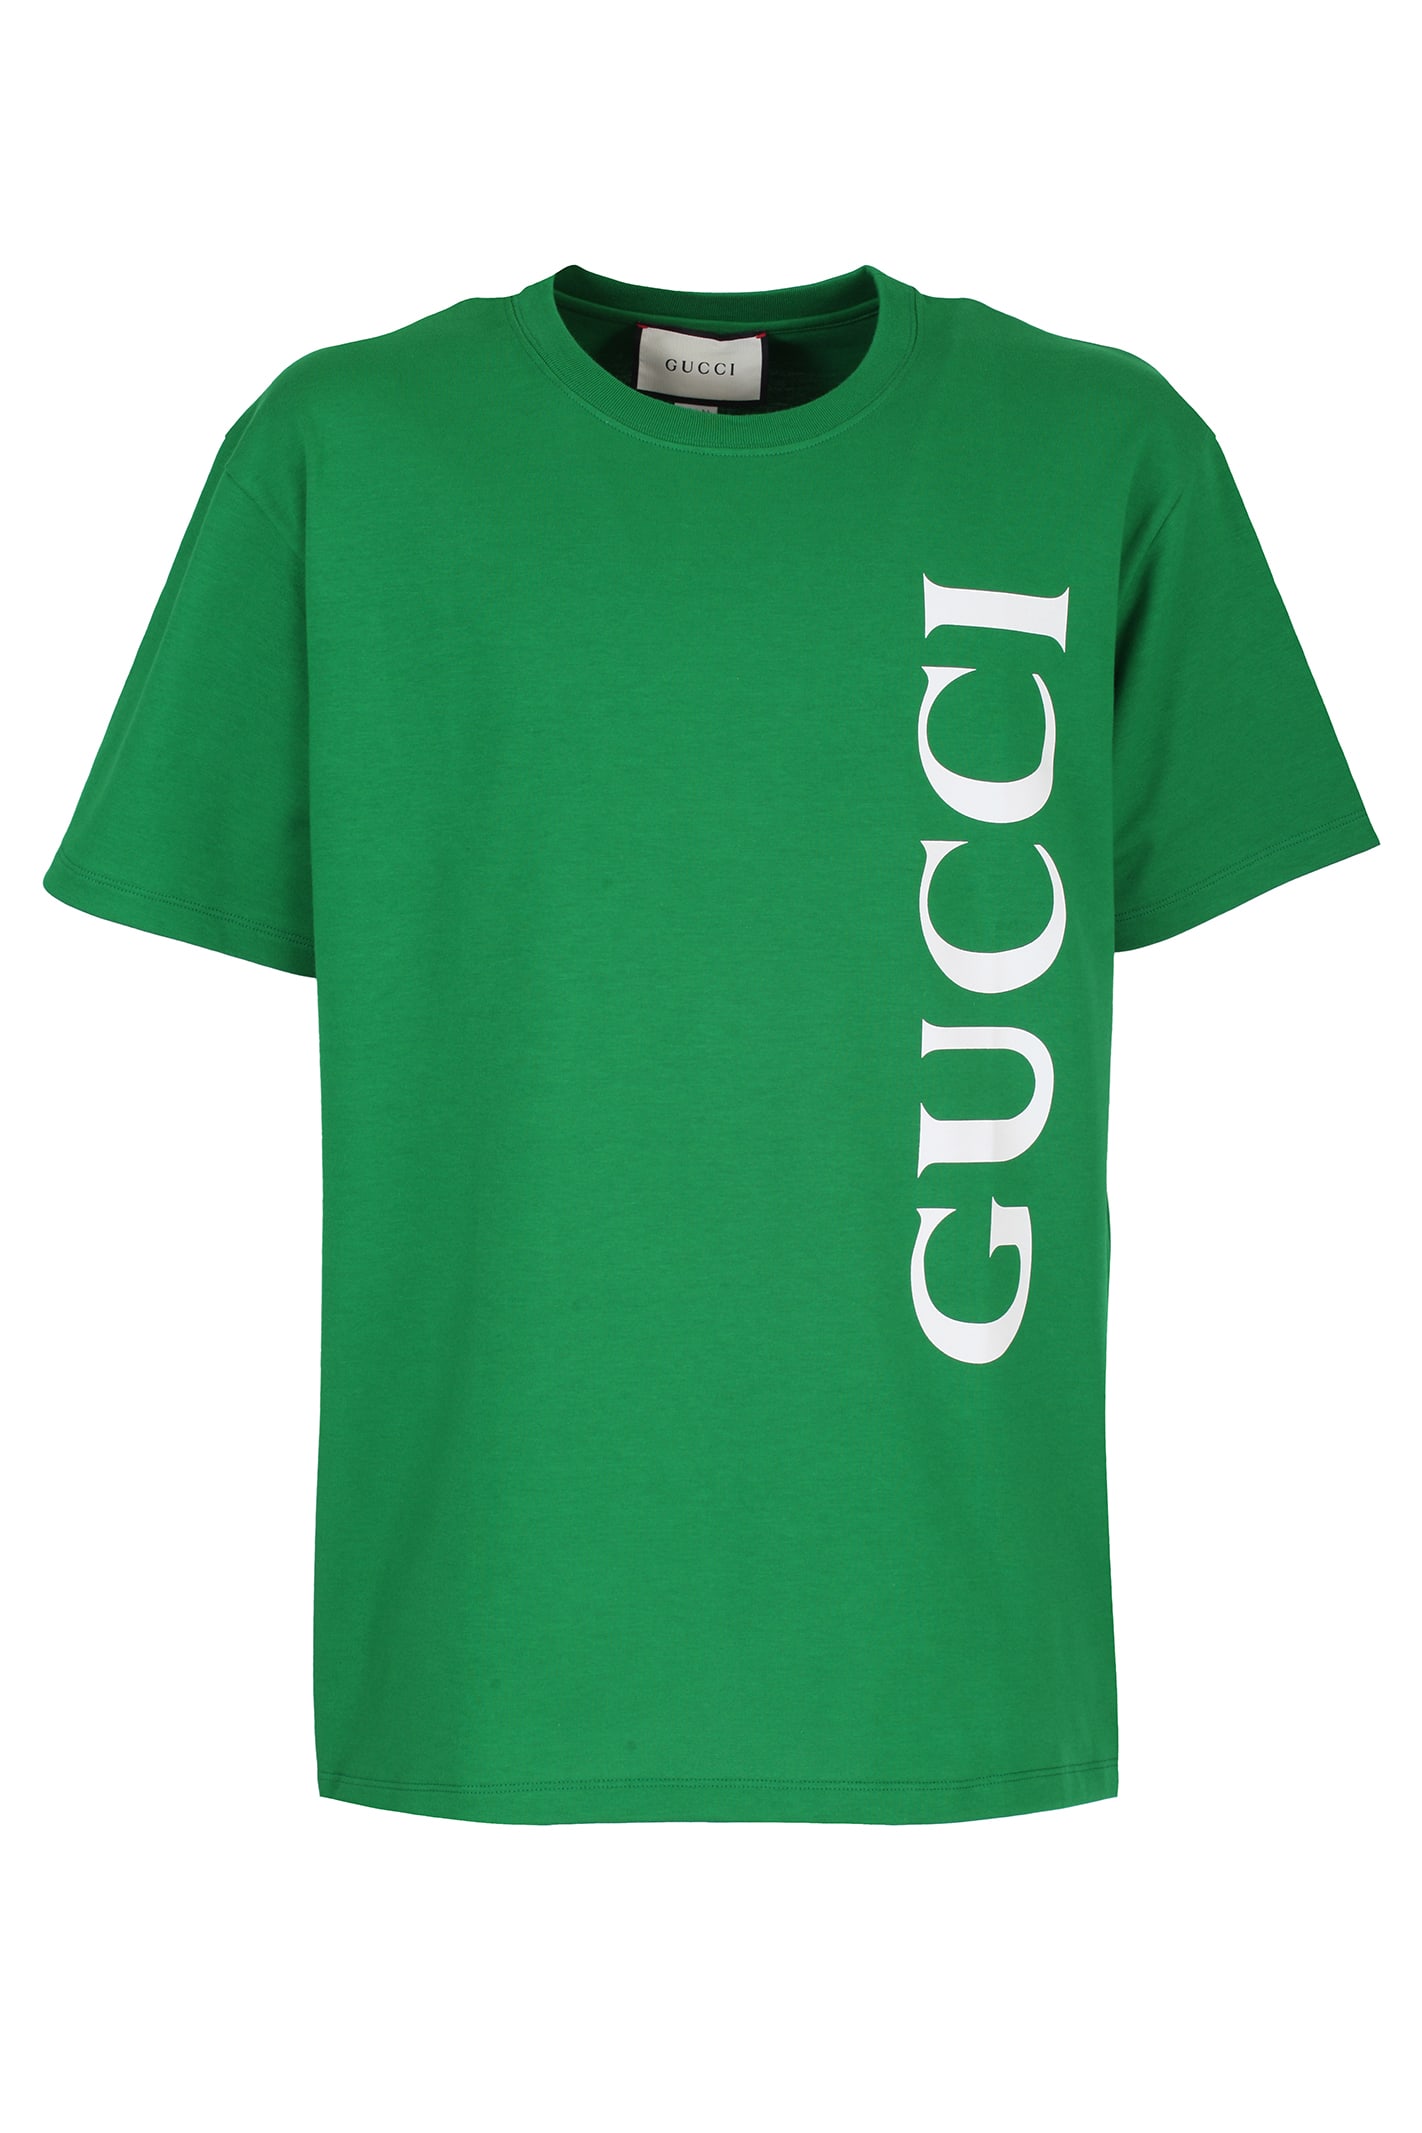 Gucci Short Sleeve T-Shirts | italist, ALWAYS LIKE A SALE